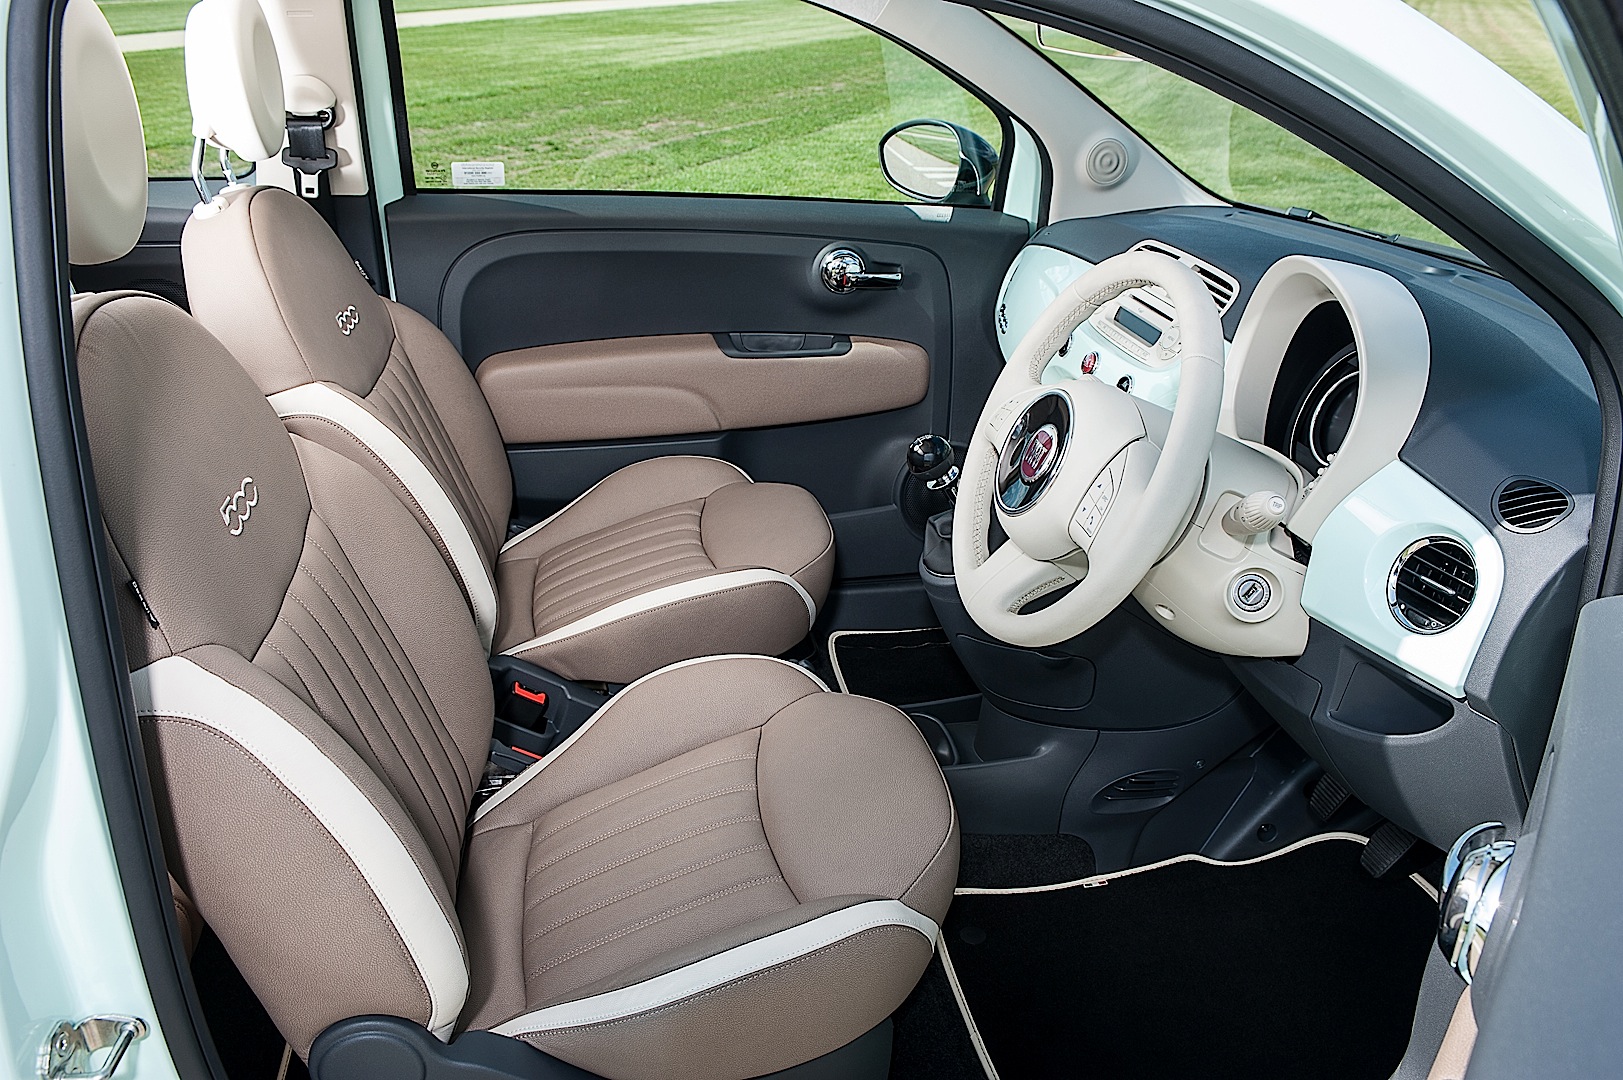 2014 Fiat 500 Uk Pricing Announced Autoevolution